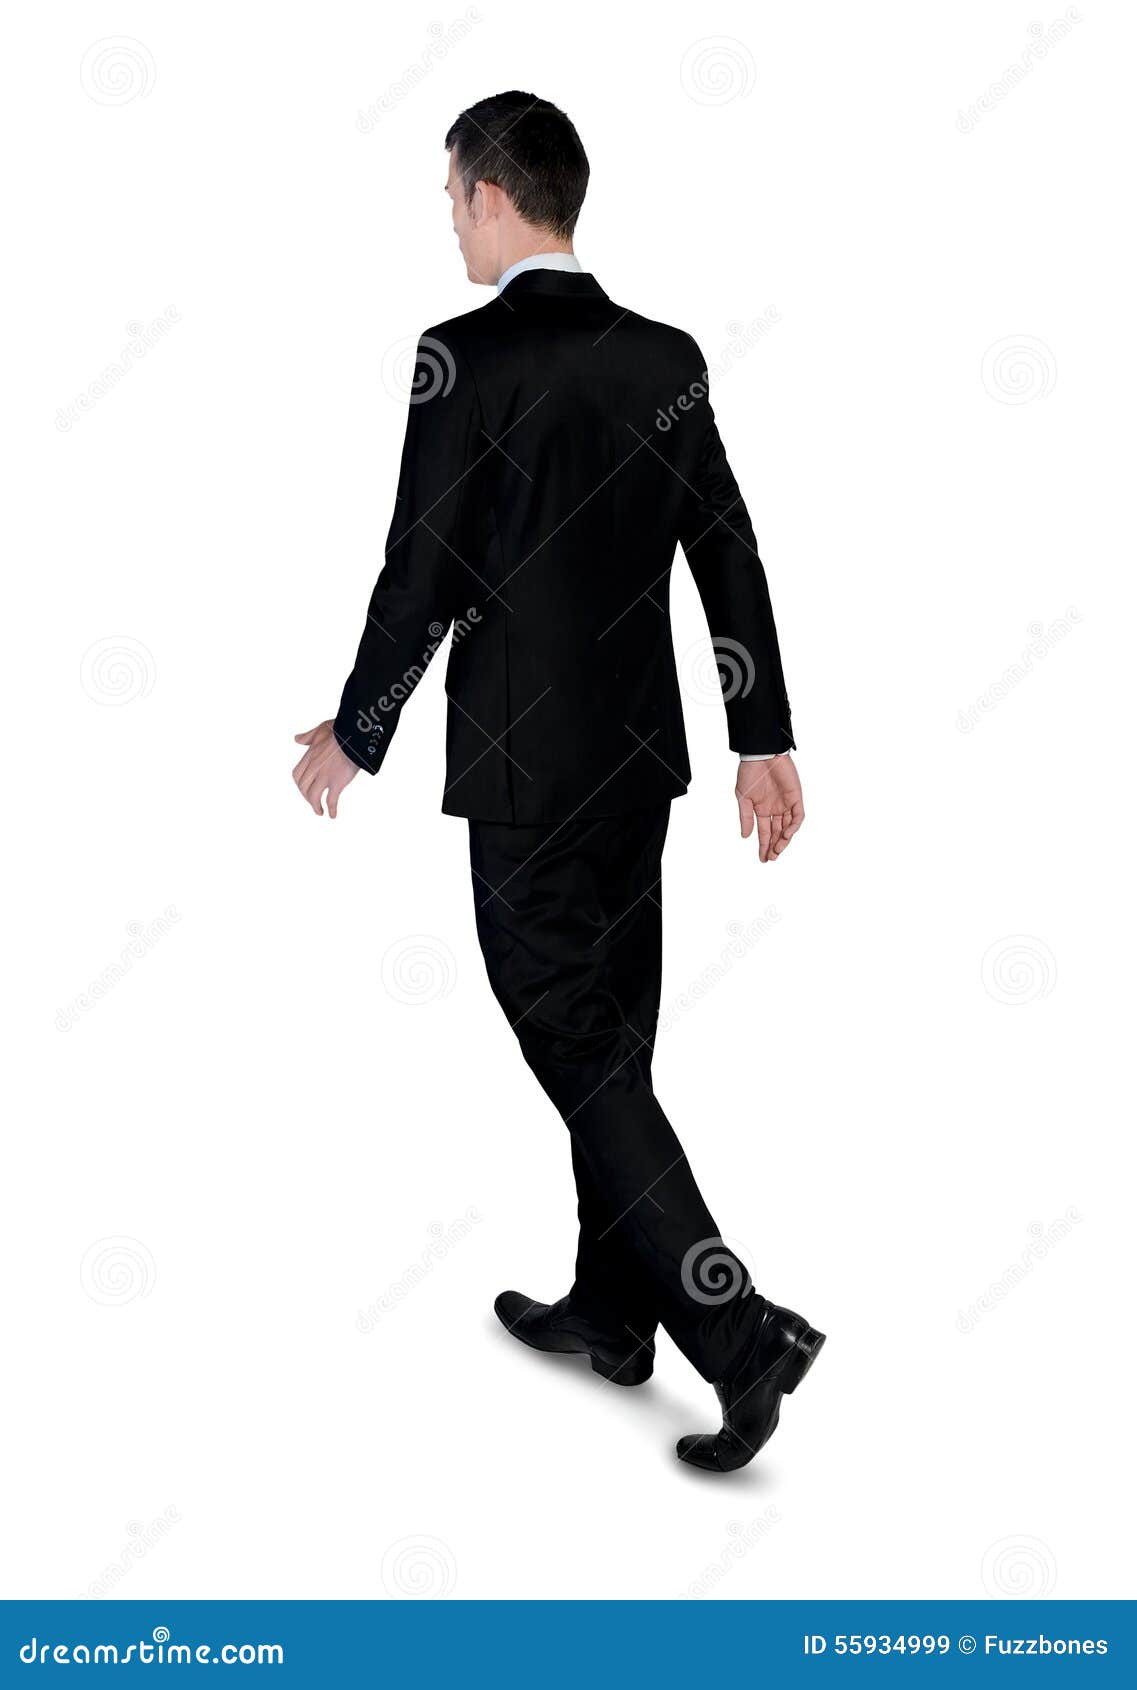 Business man walk away stock image. Image of adult, body - 55934999